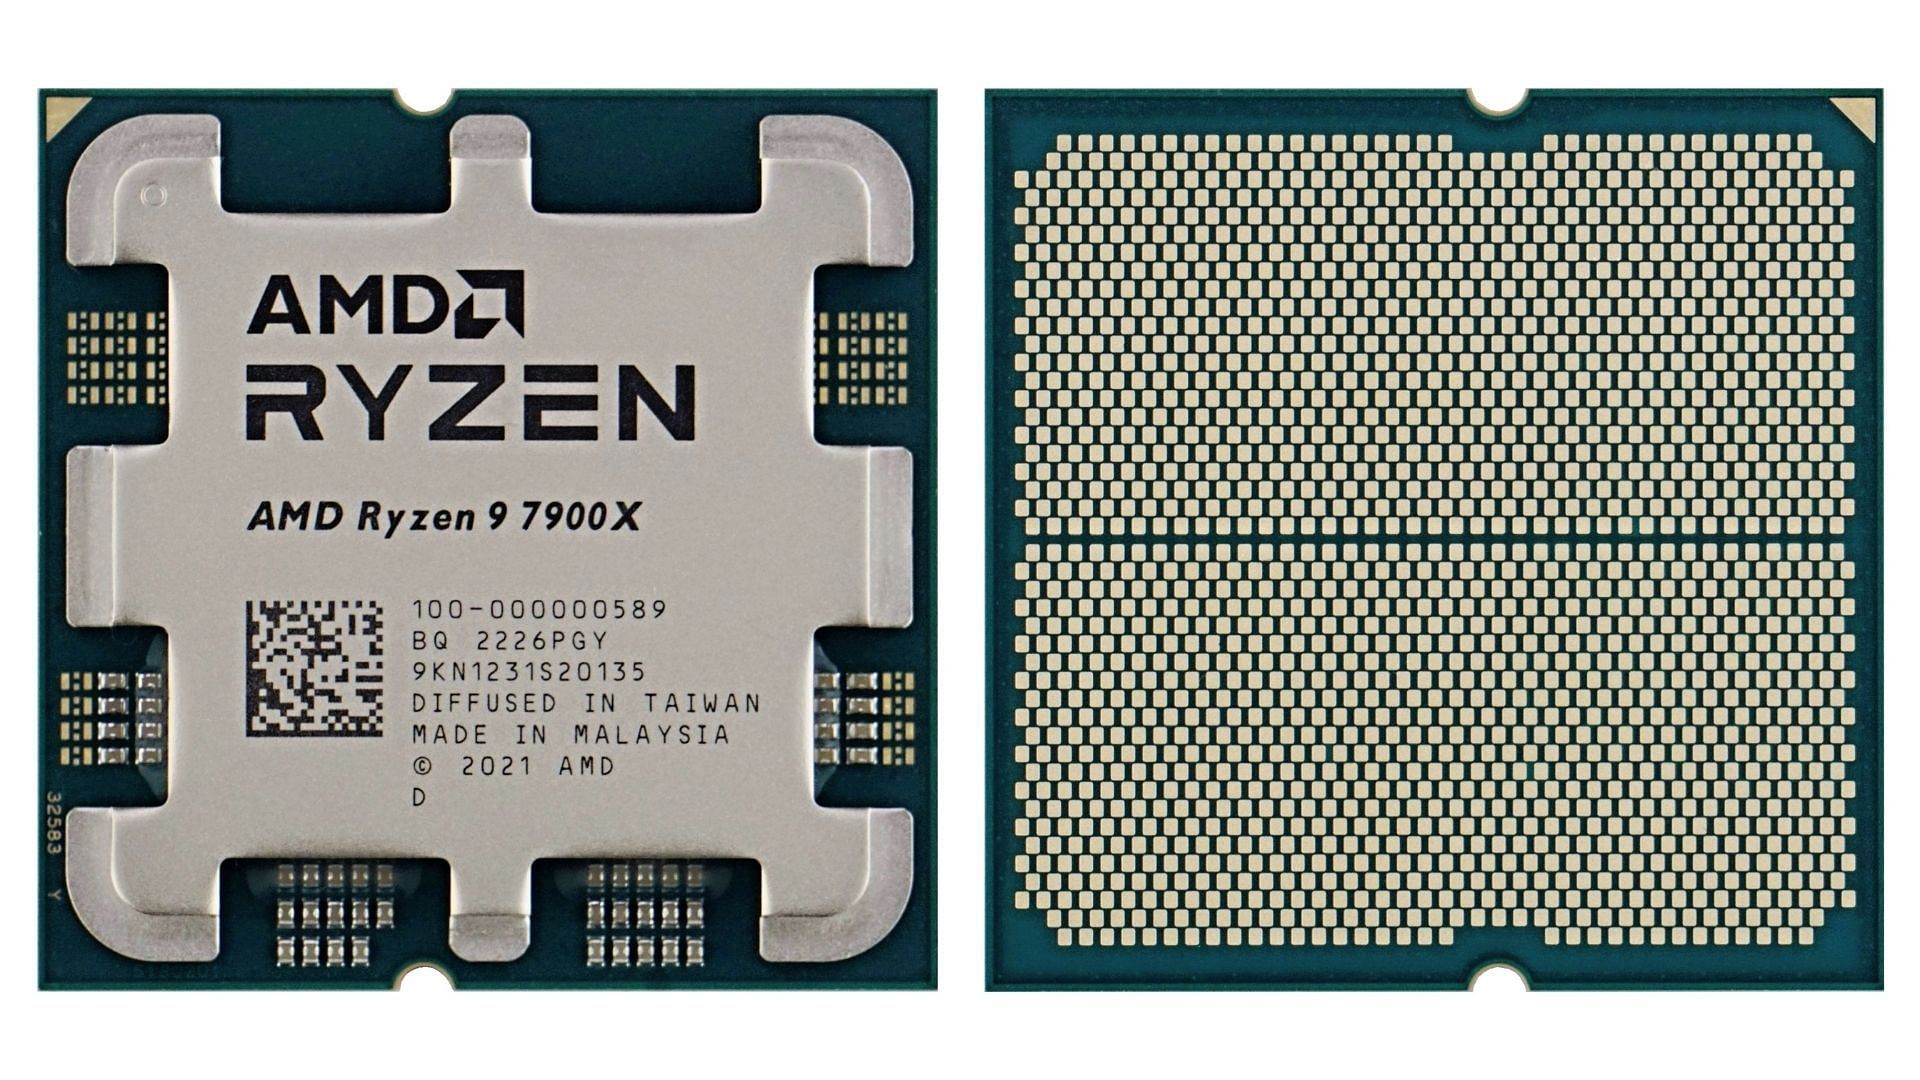 The Ryzen 9 7900X processor (Image via AMD)